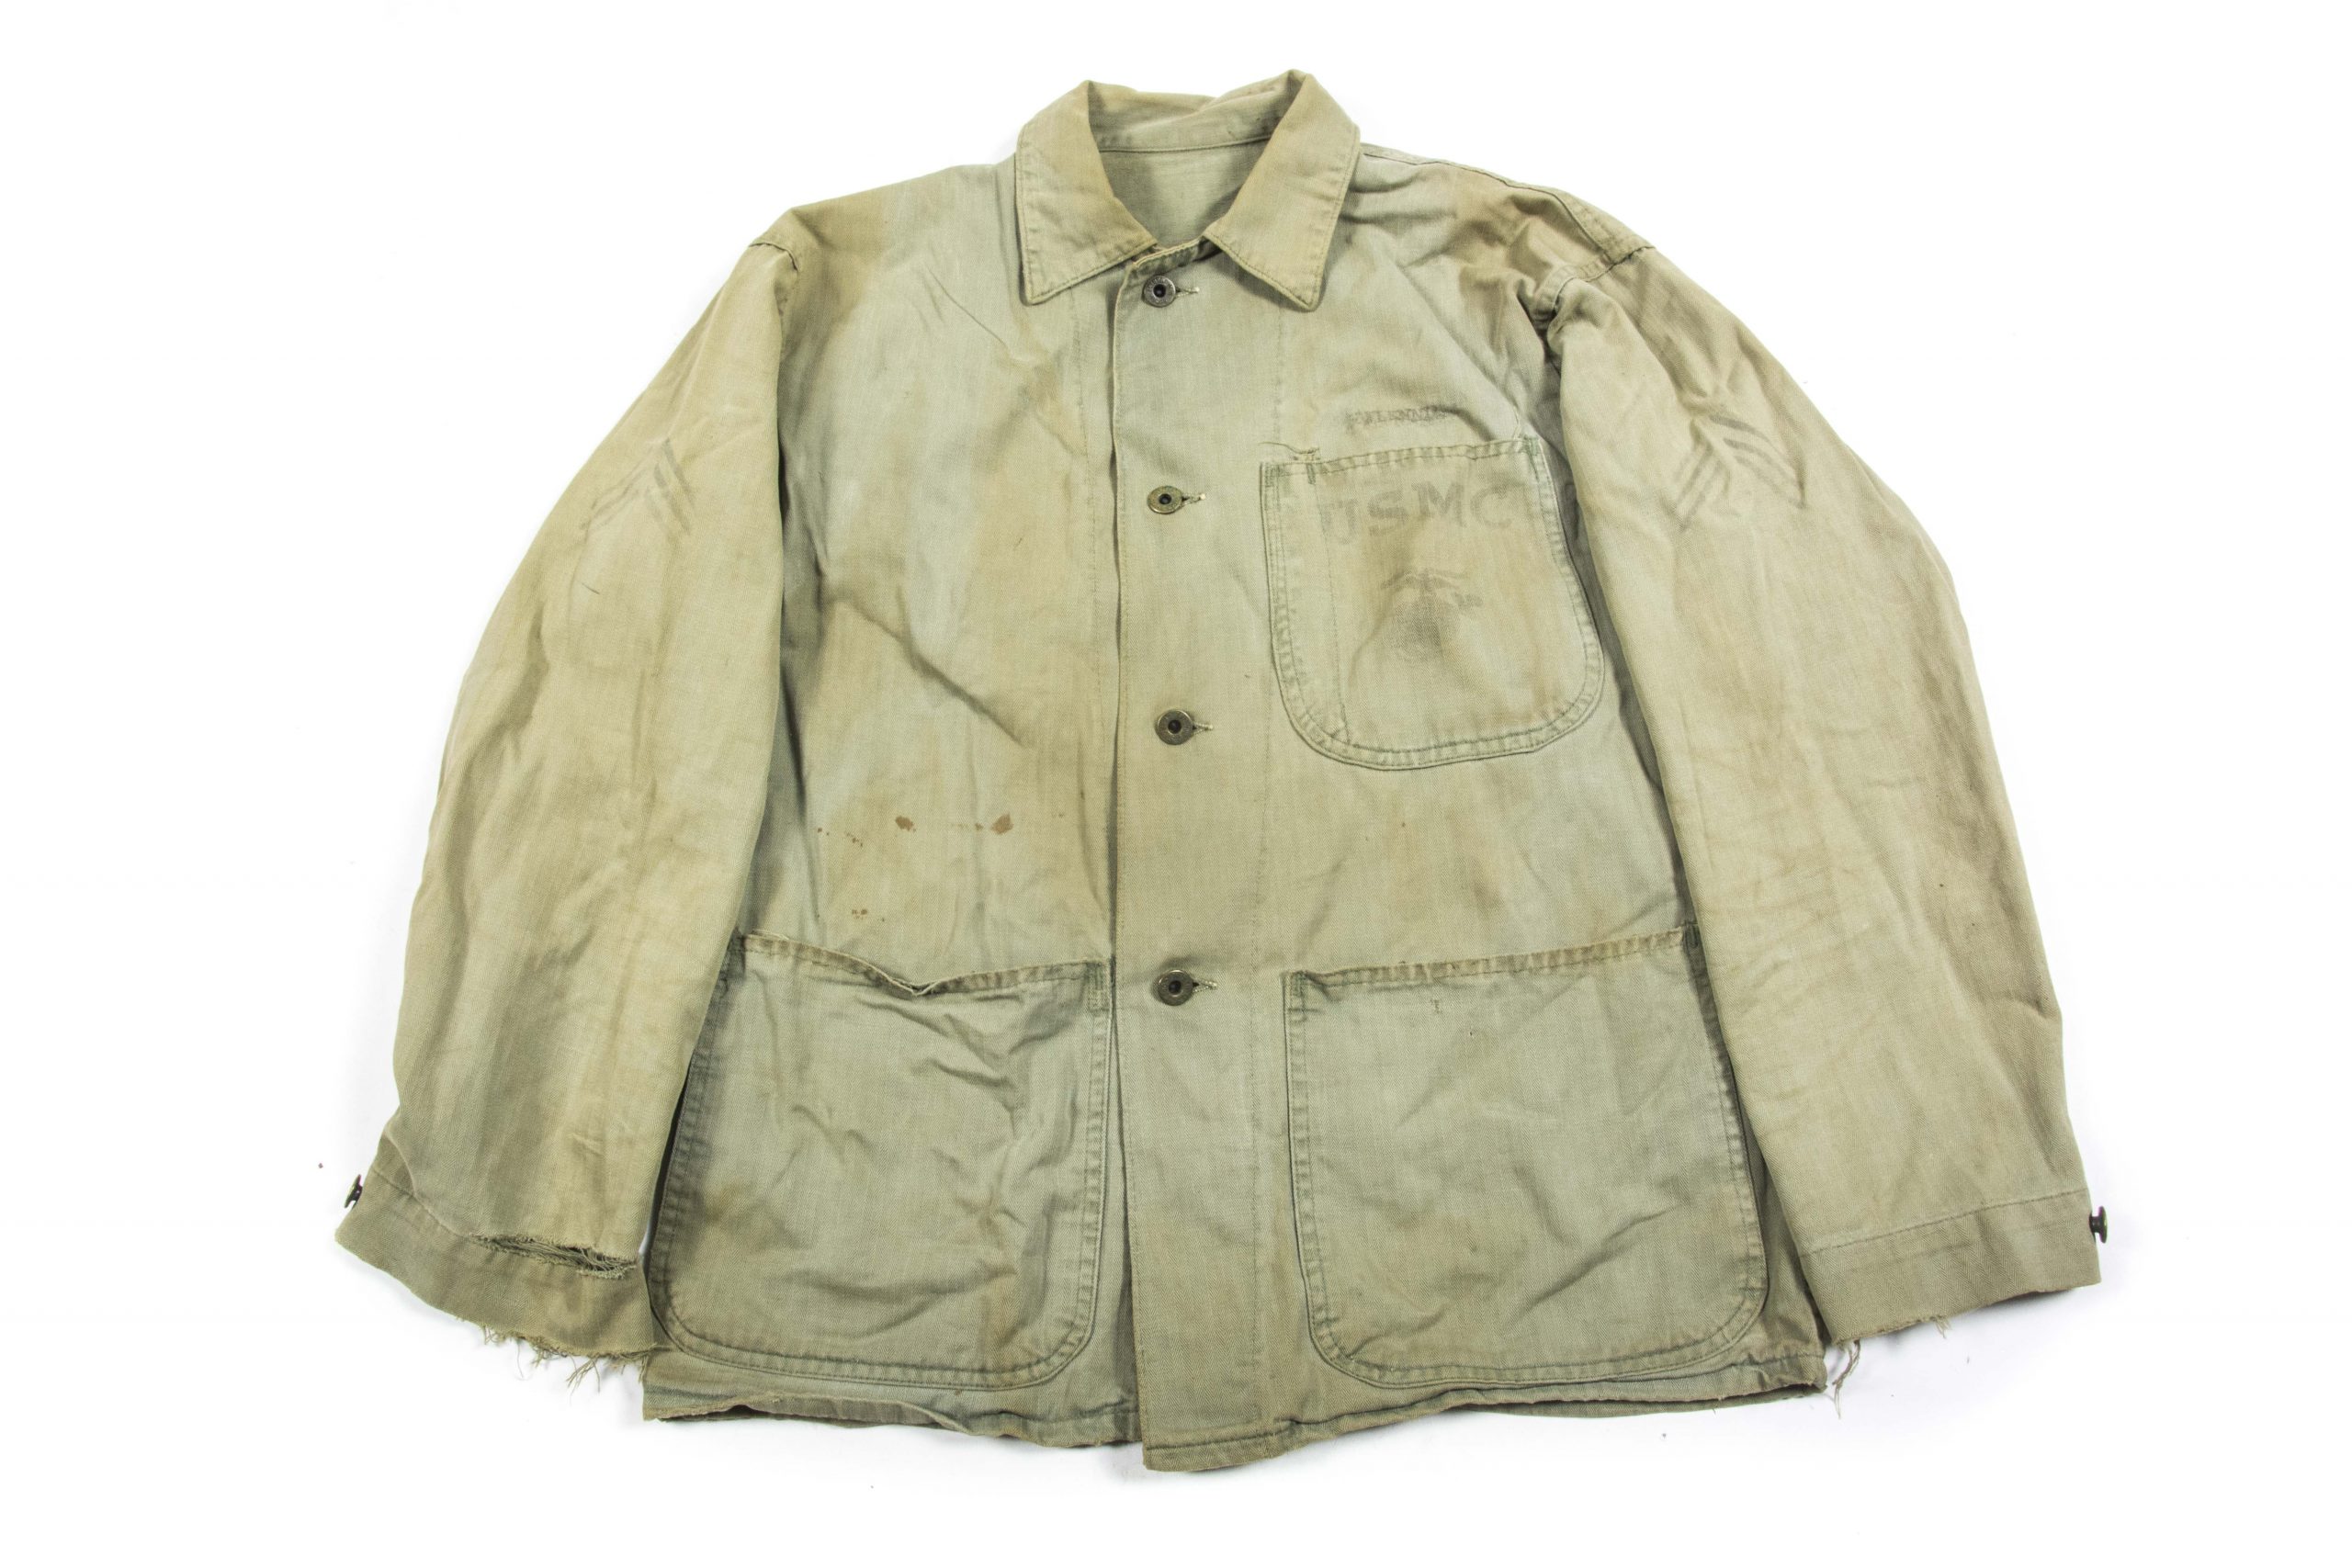 USMC HBT P41 jacket with stencilled ranks – fjm44